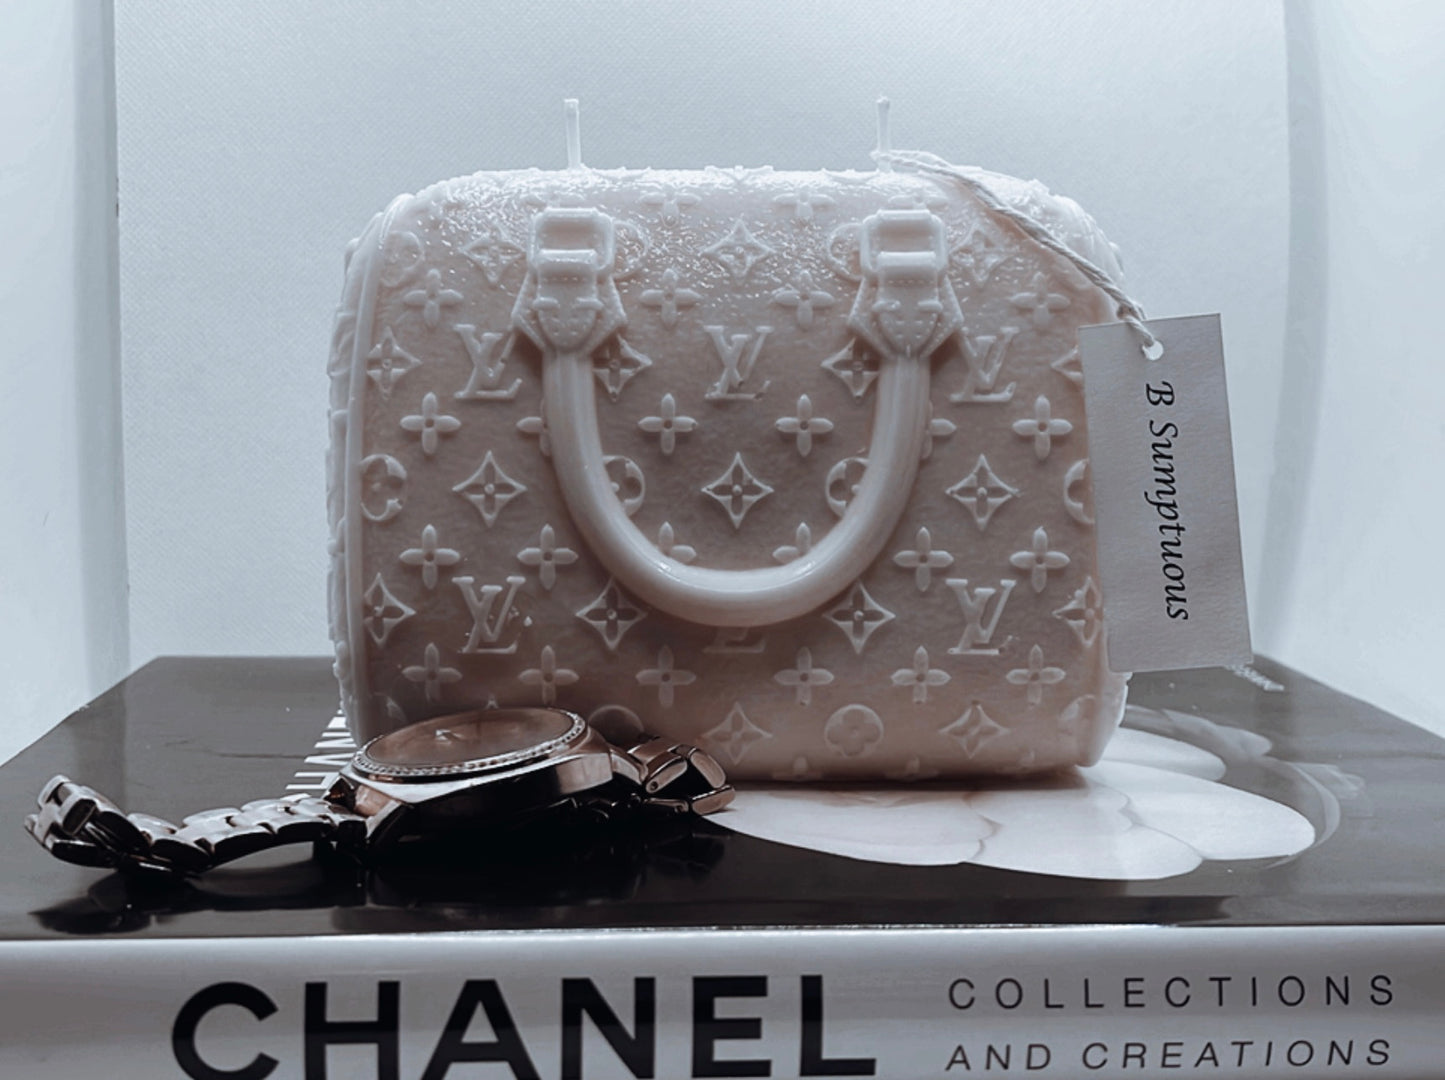 Gucci, LV, or Chanel Purse Candle – ashandoakcandleco